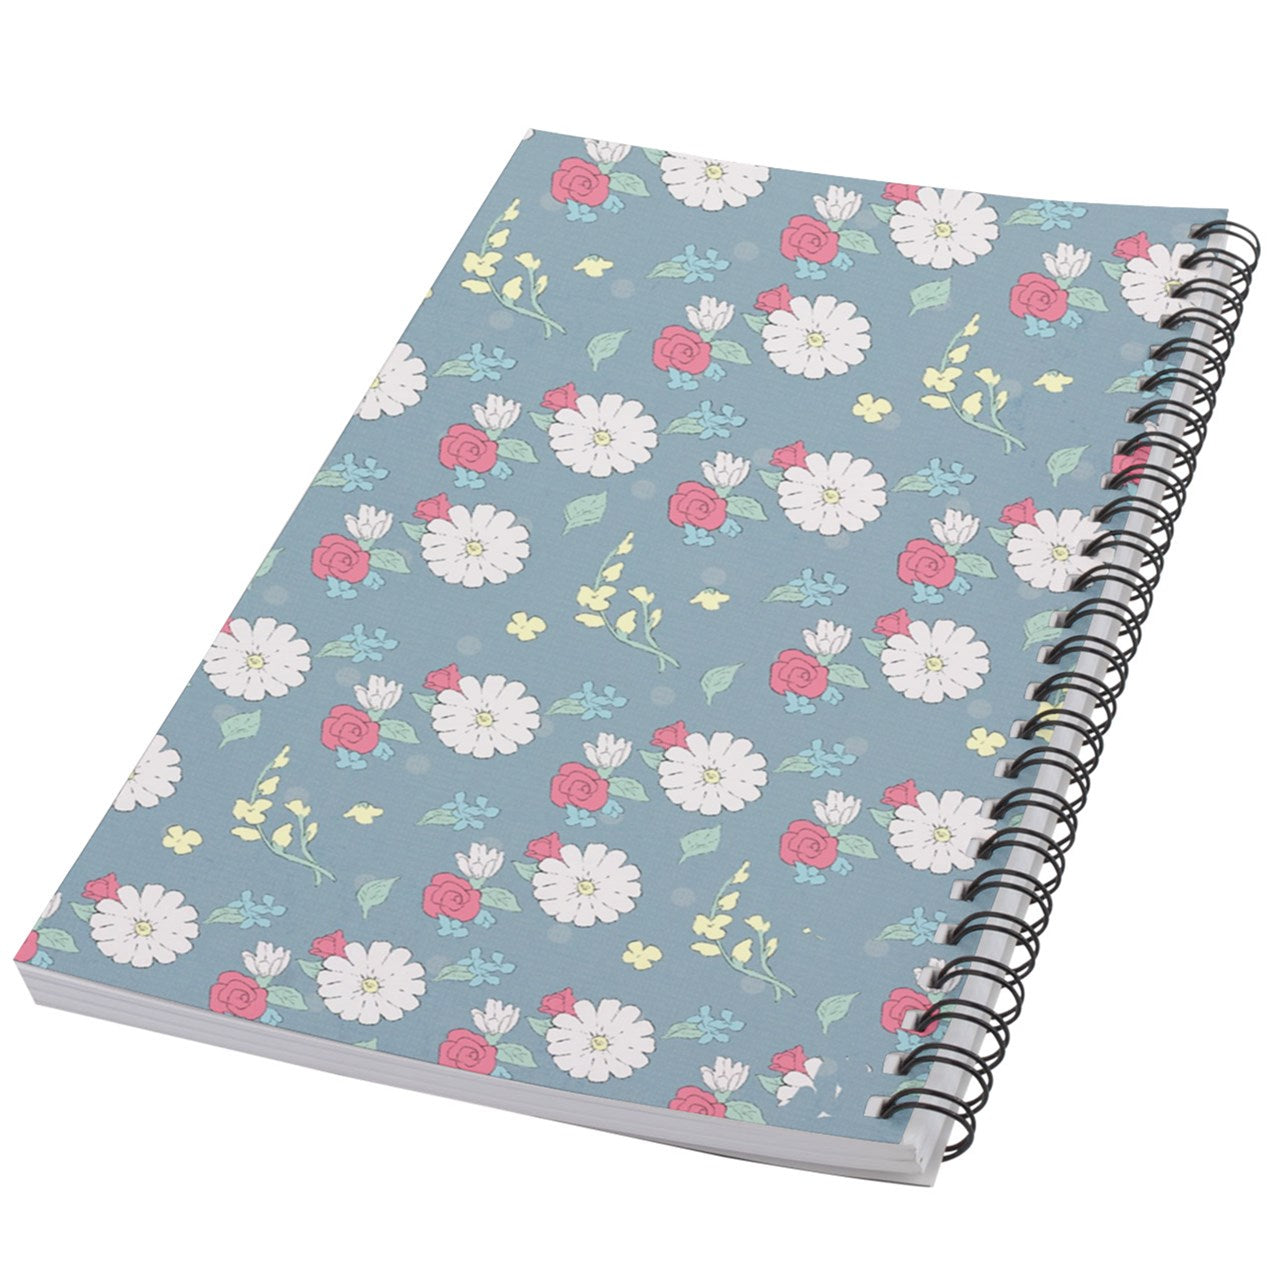 Flower Girl Notebook